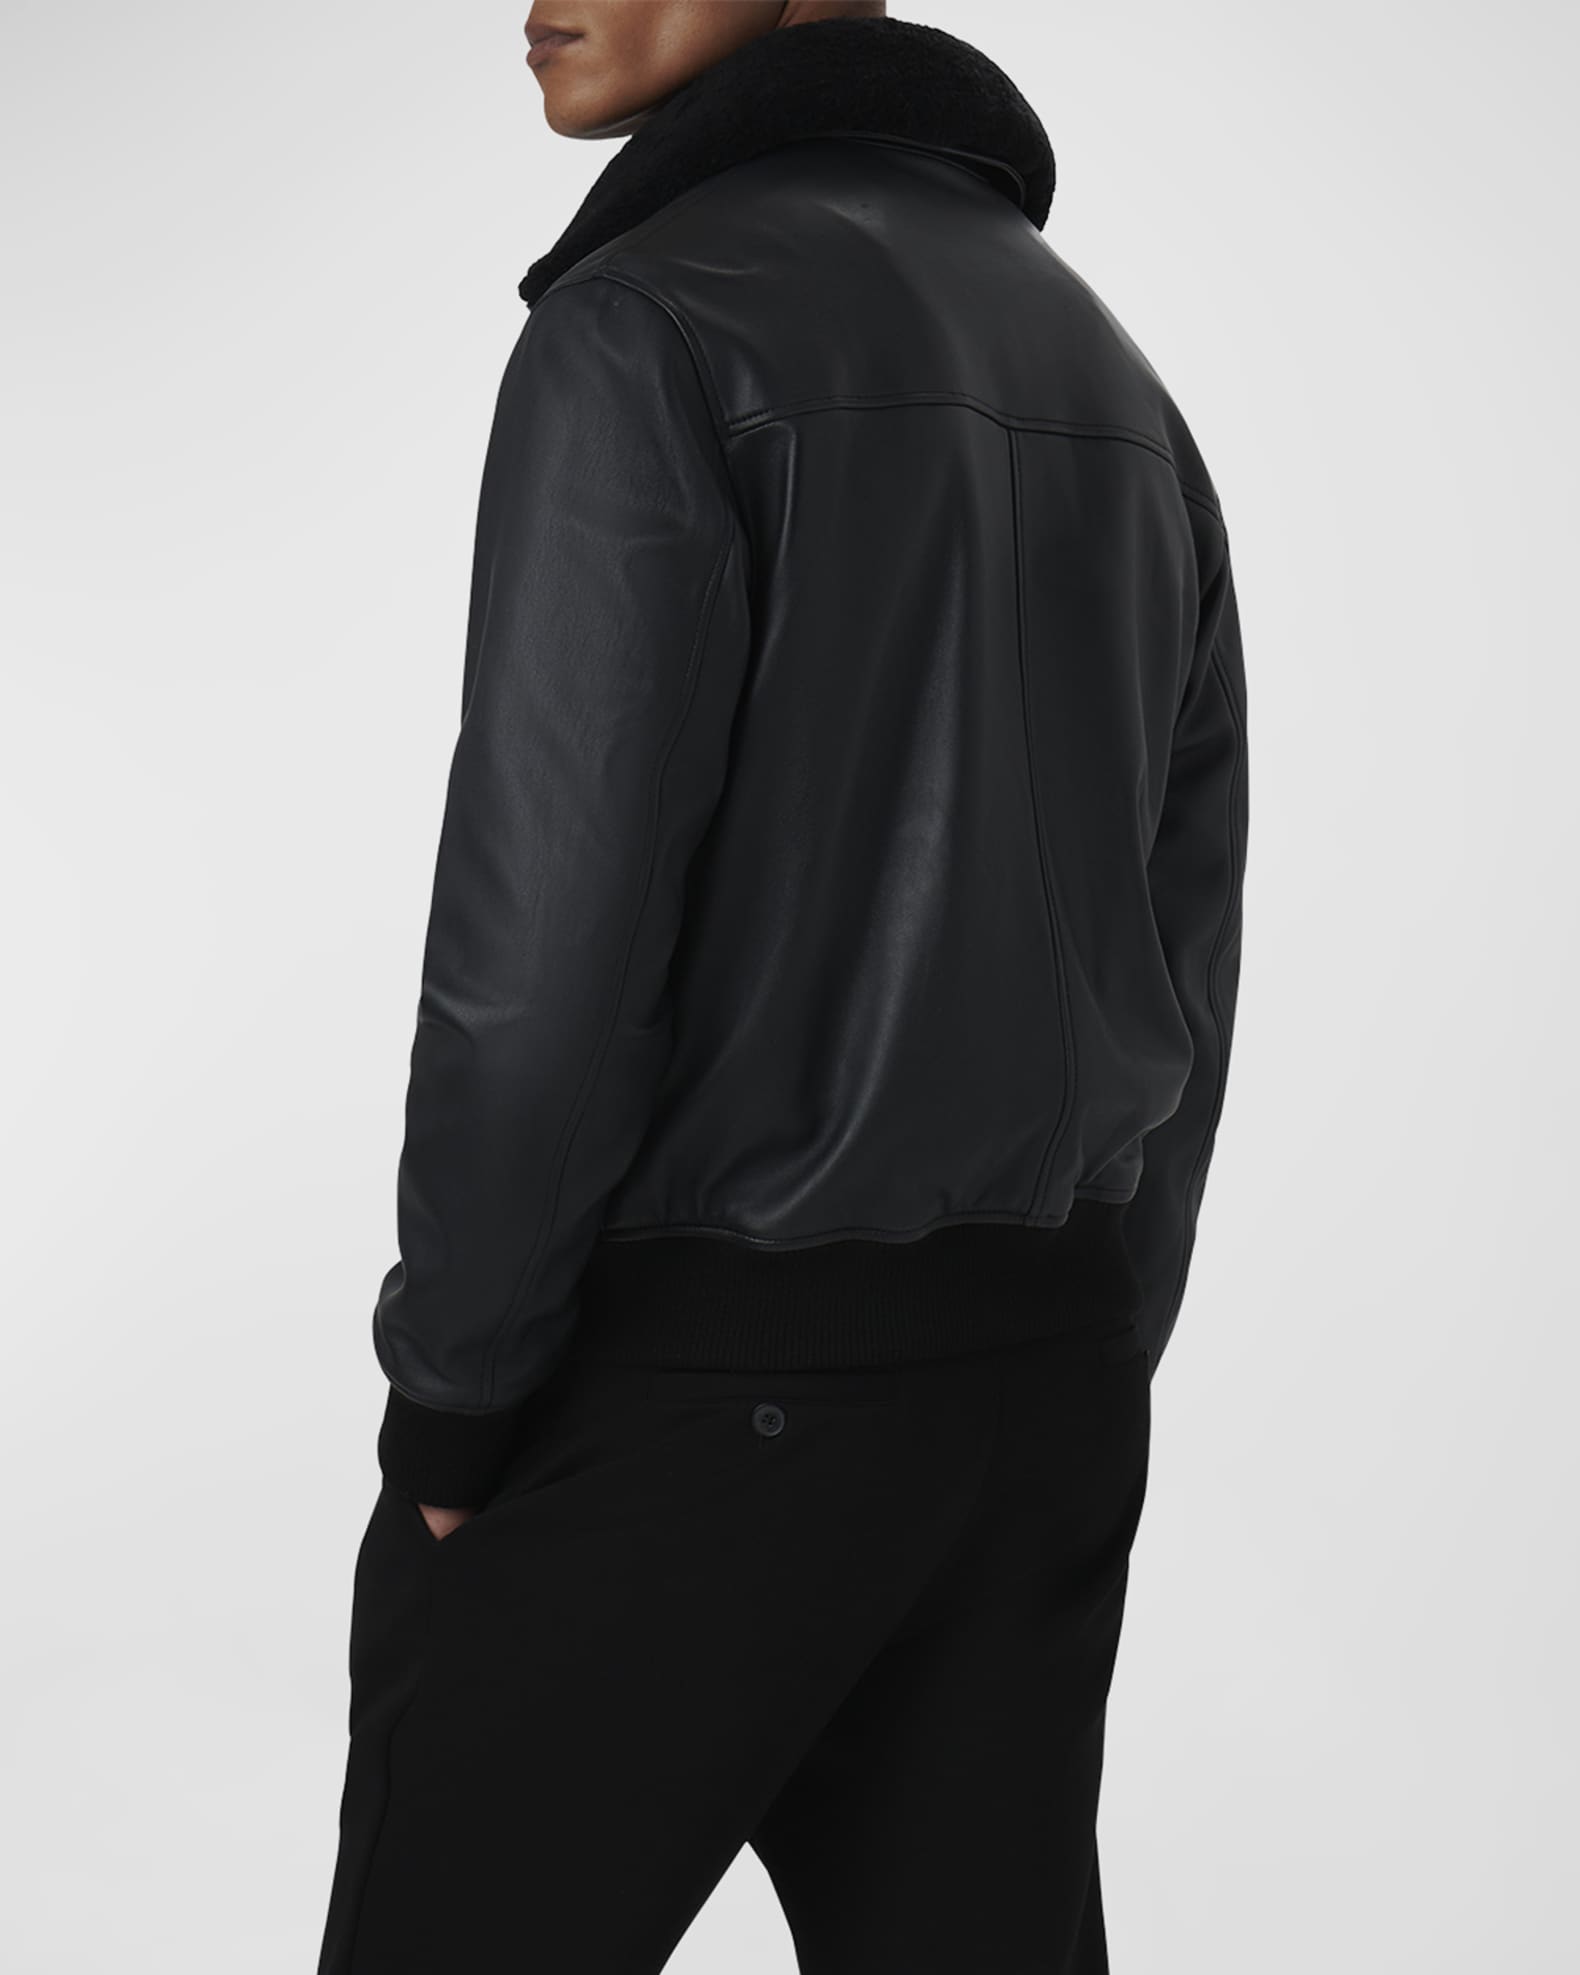 Bugatchi Men's Shearling-Collar Leather Bomber Jacket | Neiman Marcus